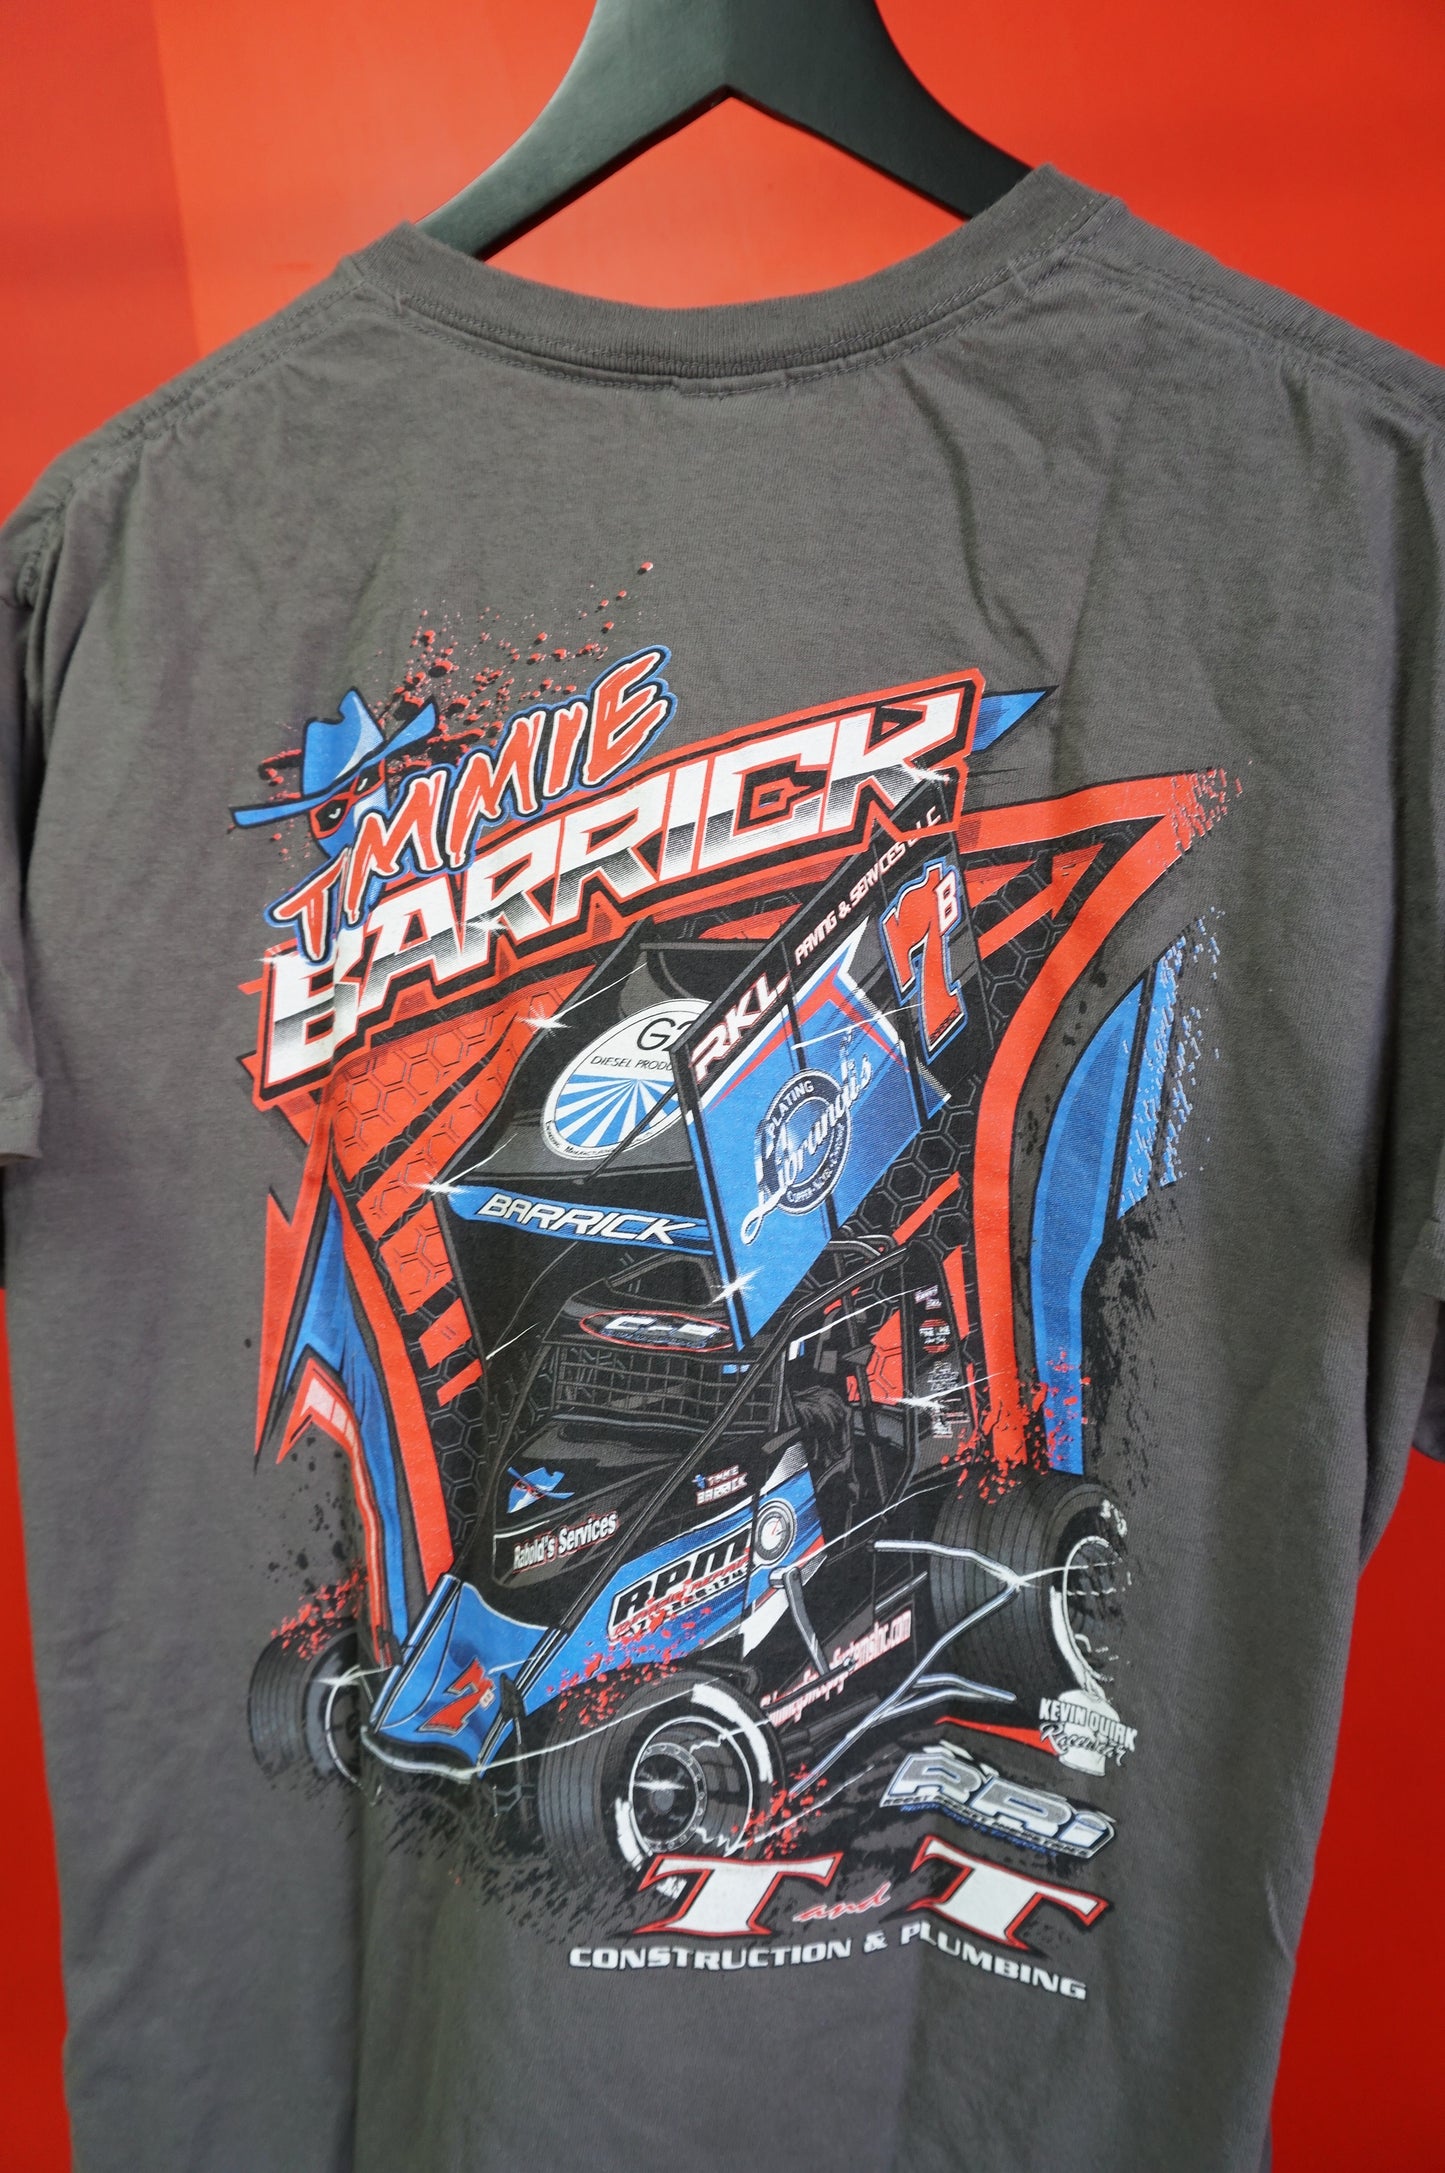 (L) Timmie Barrick Dirt Racing T-Shirt